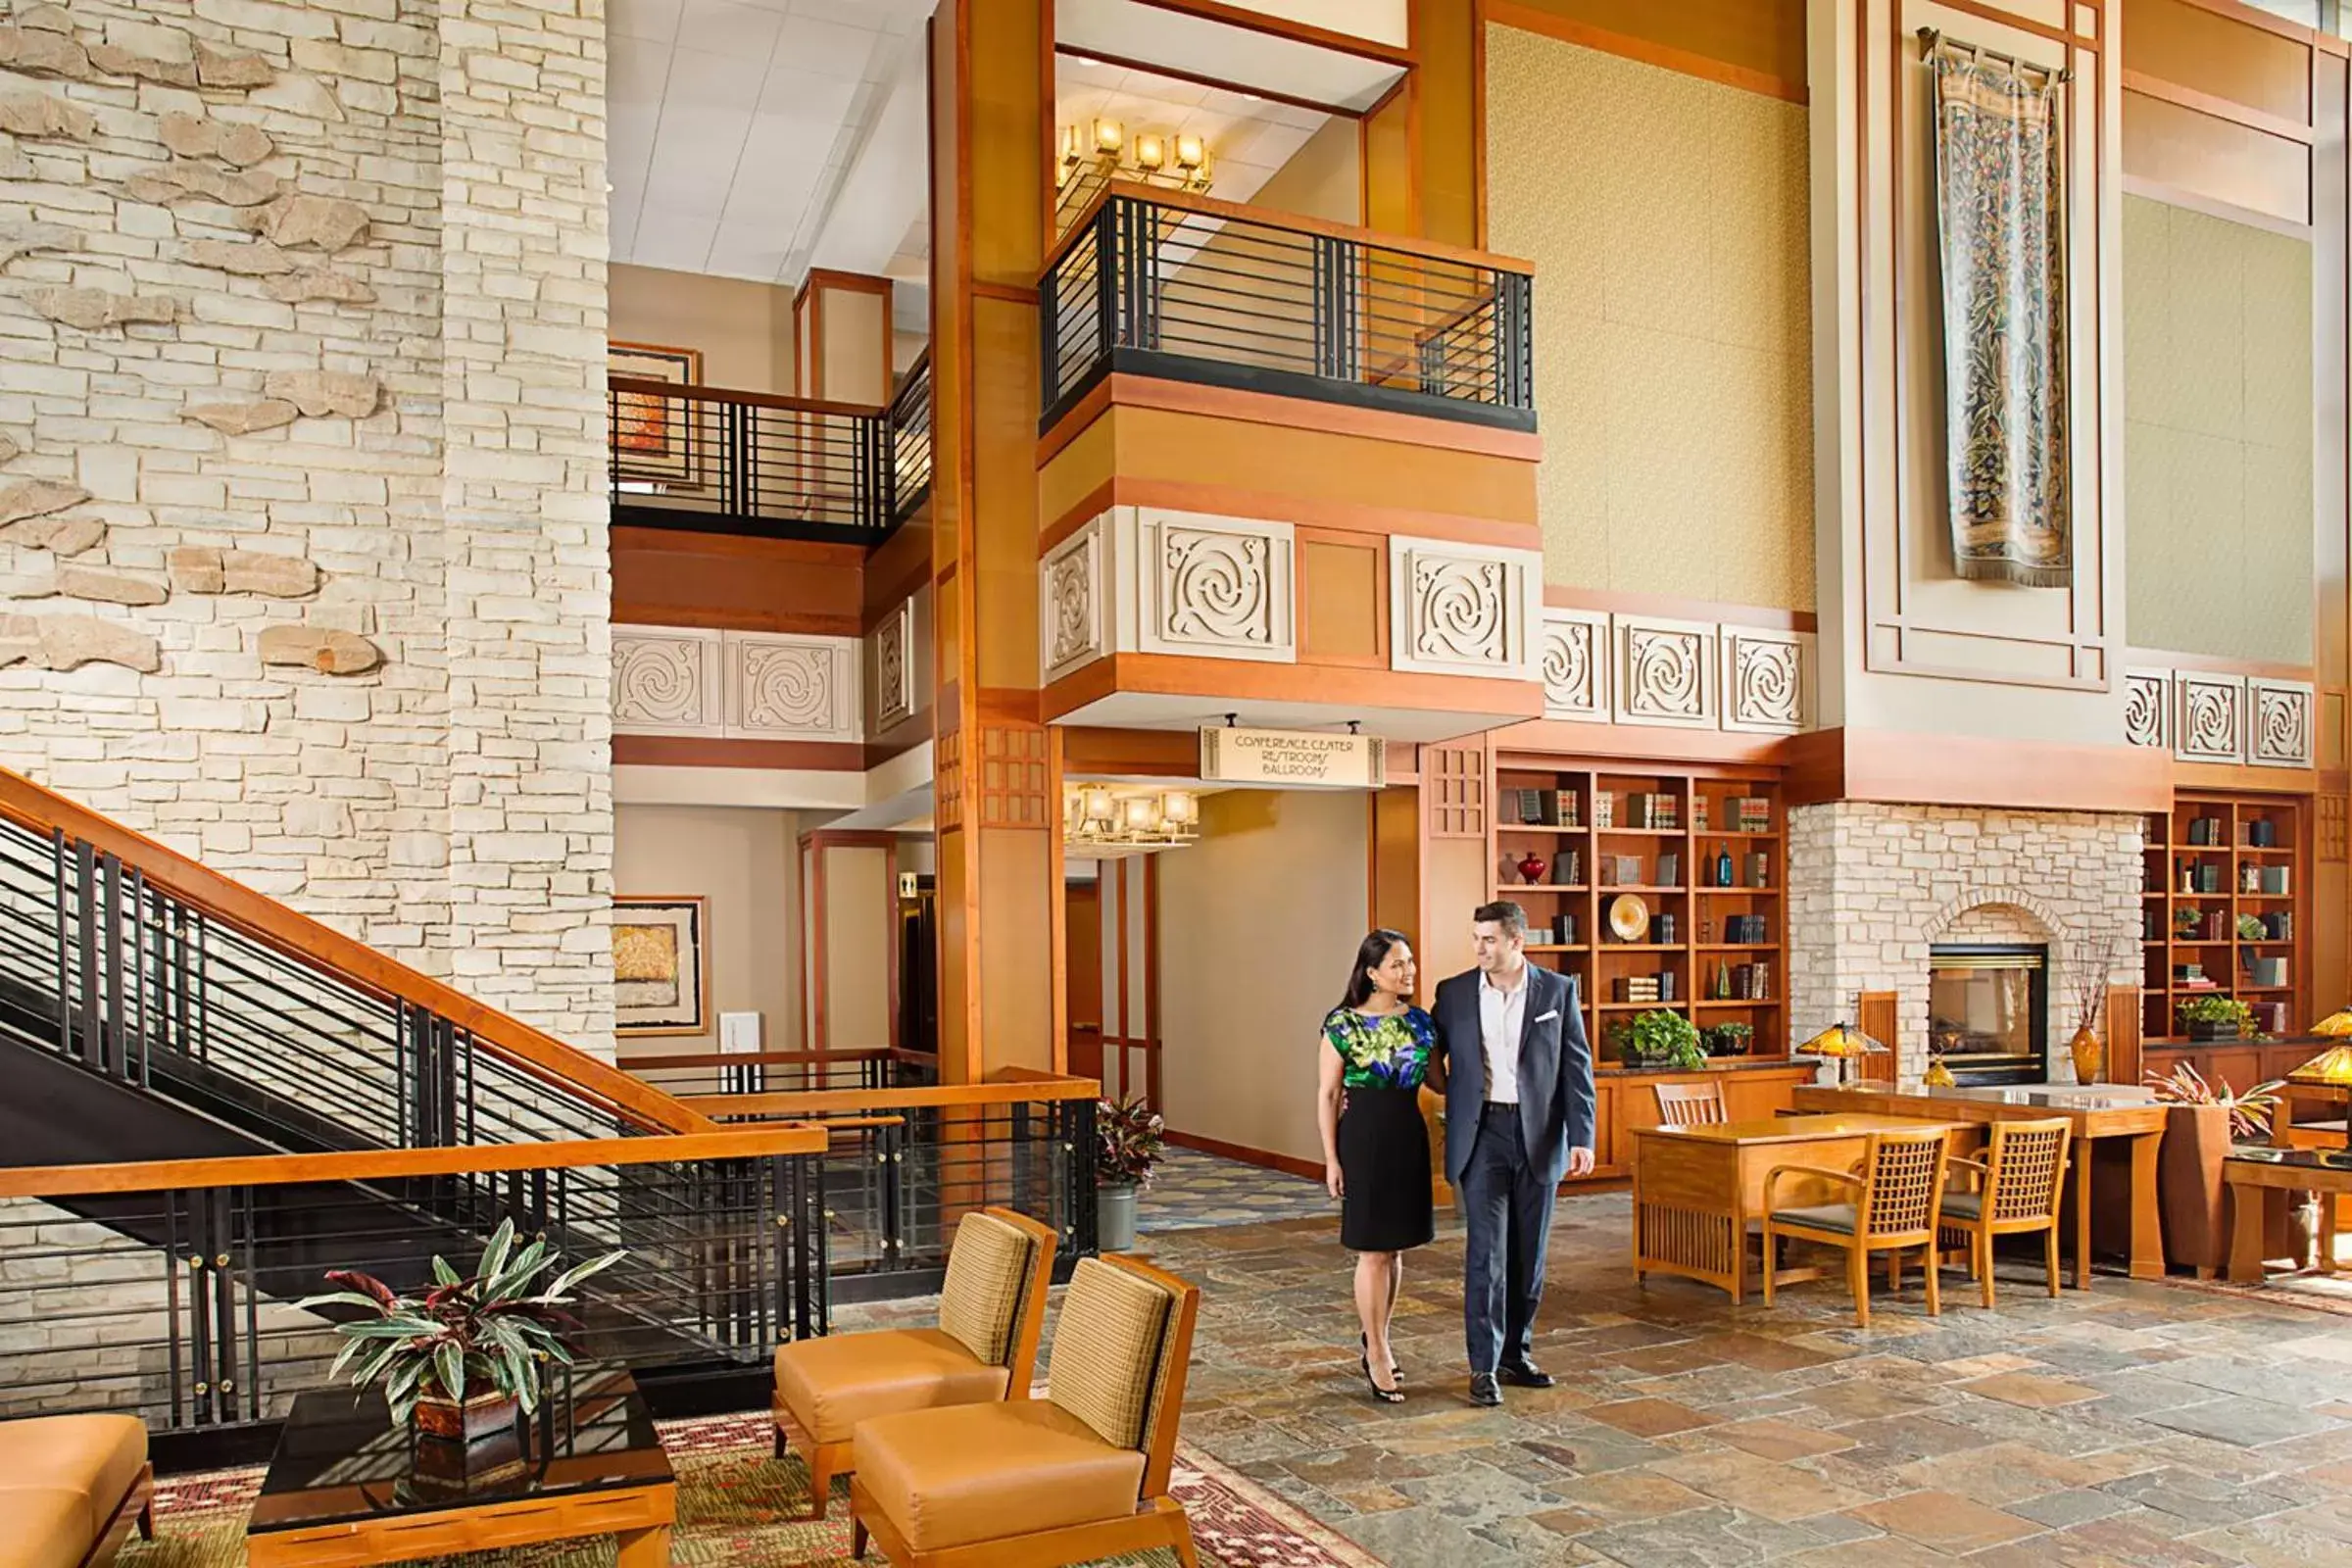 Lobby or reception in Eaglewood Resort & Spa